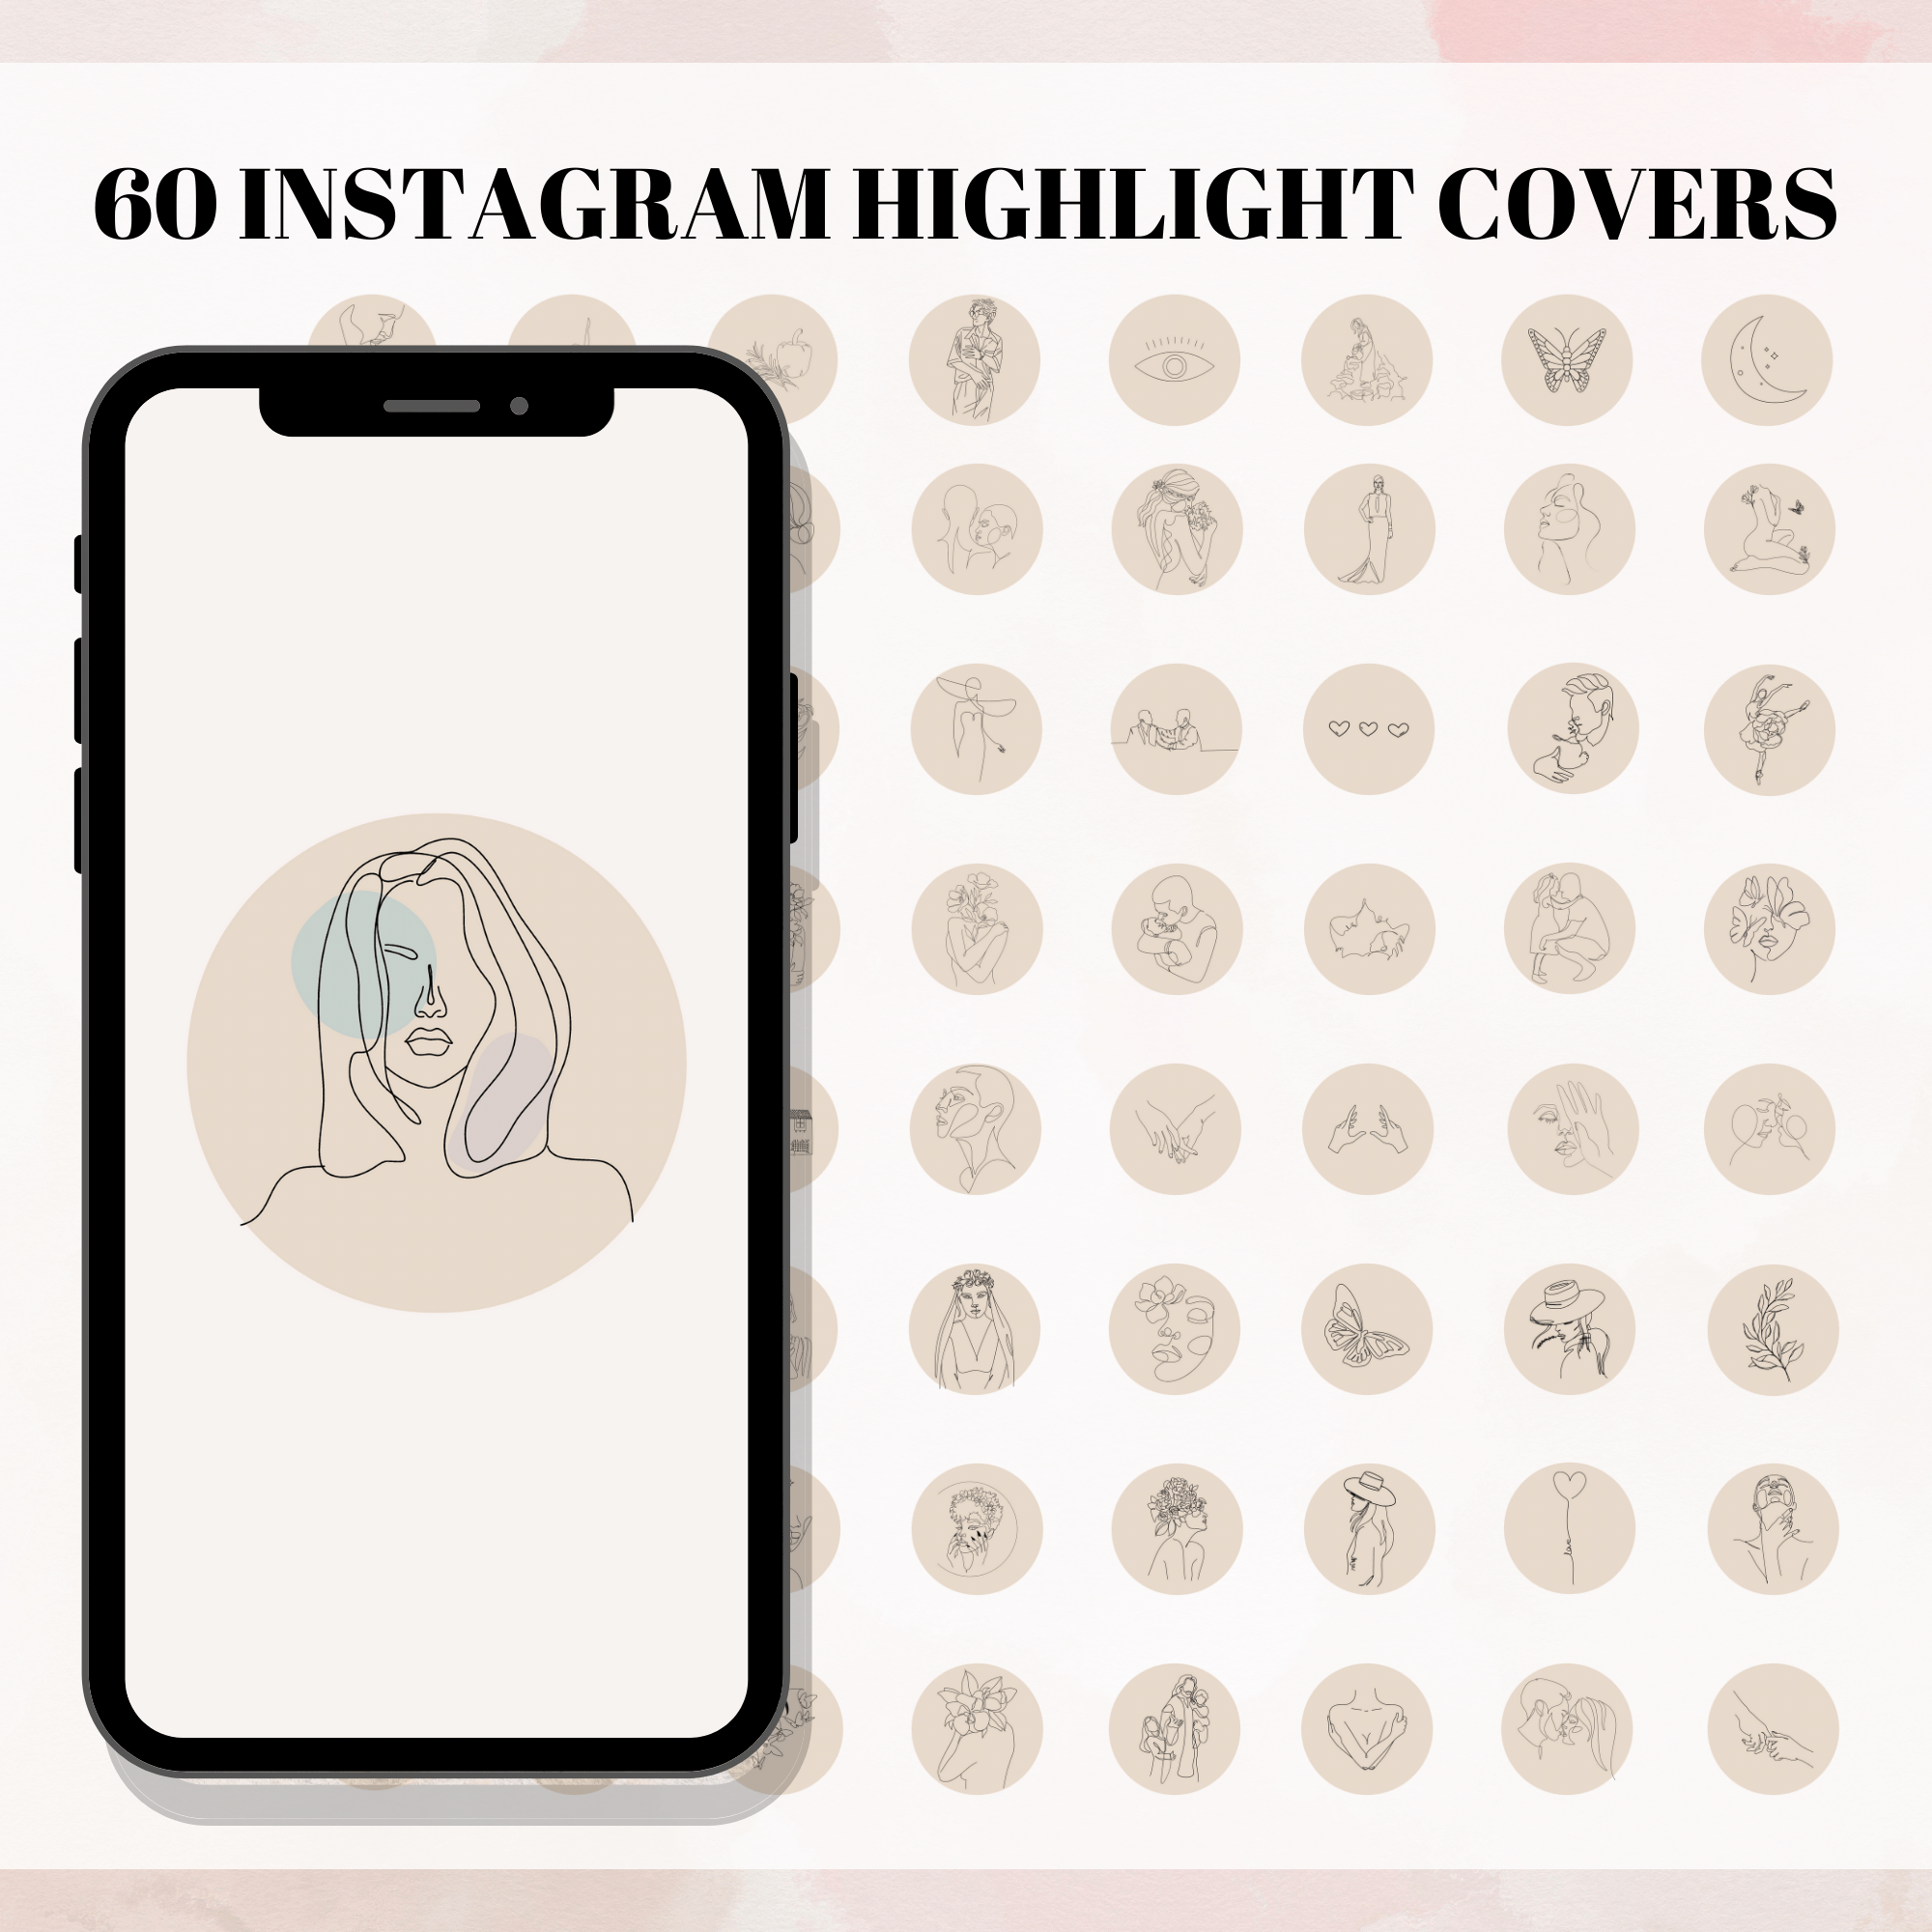 100 Instagram Highlight covers - Minimalist